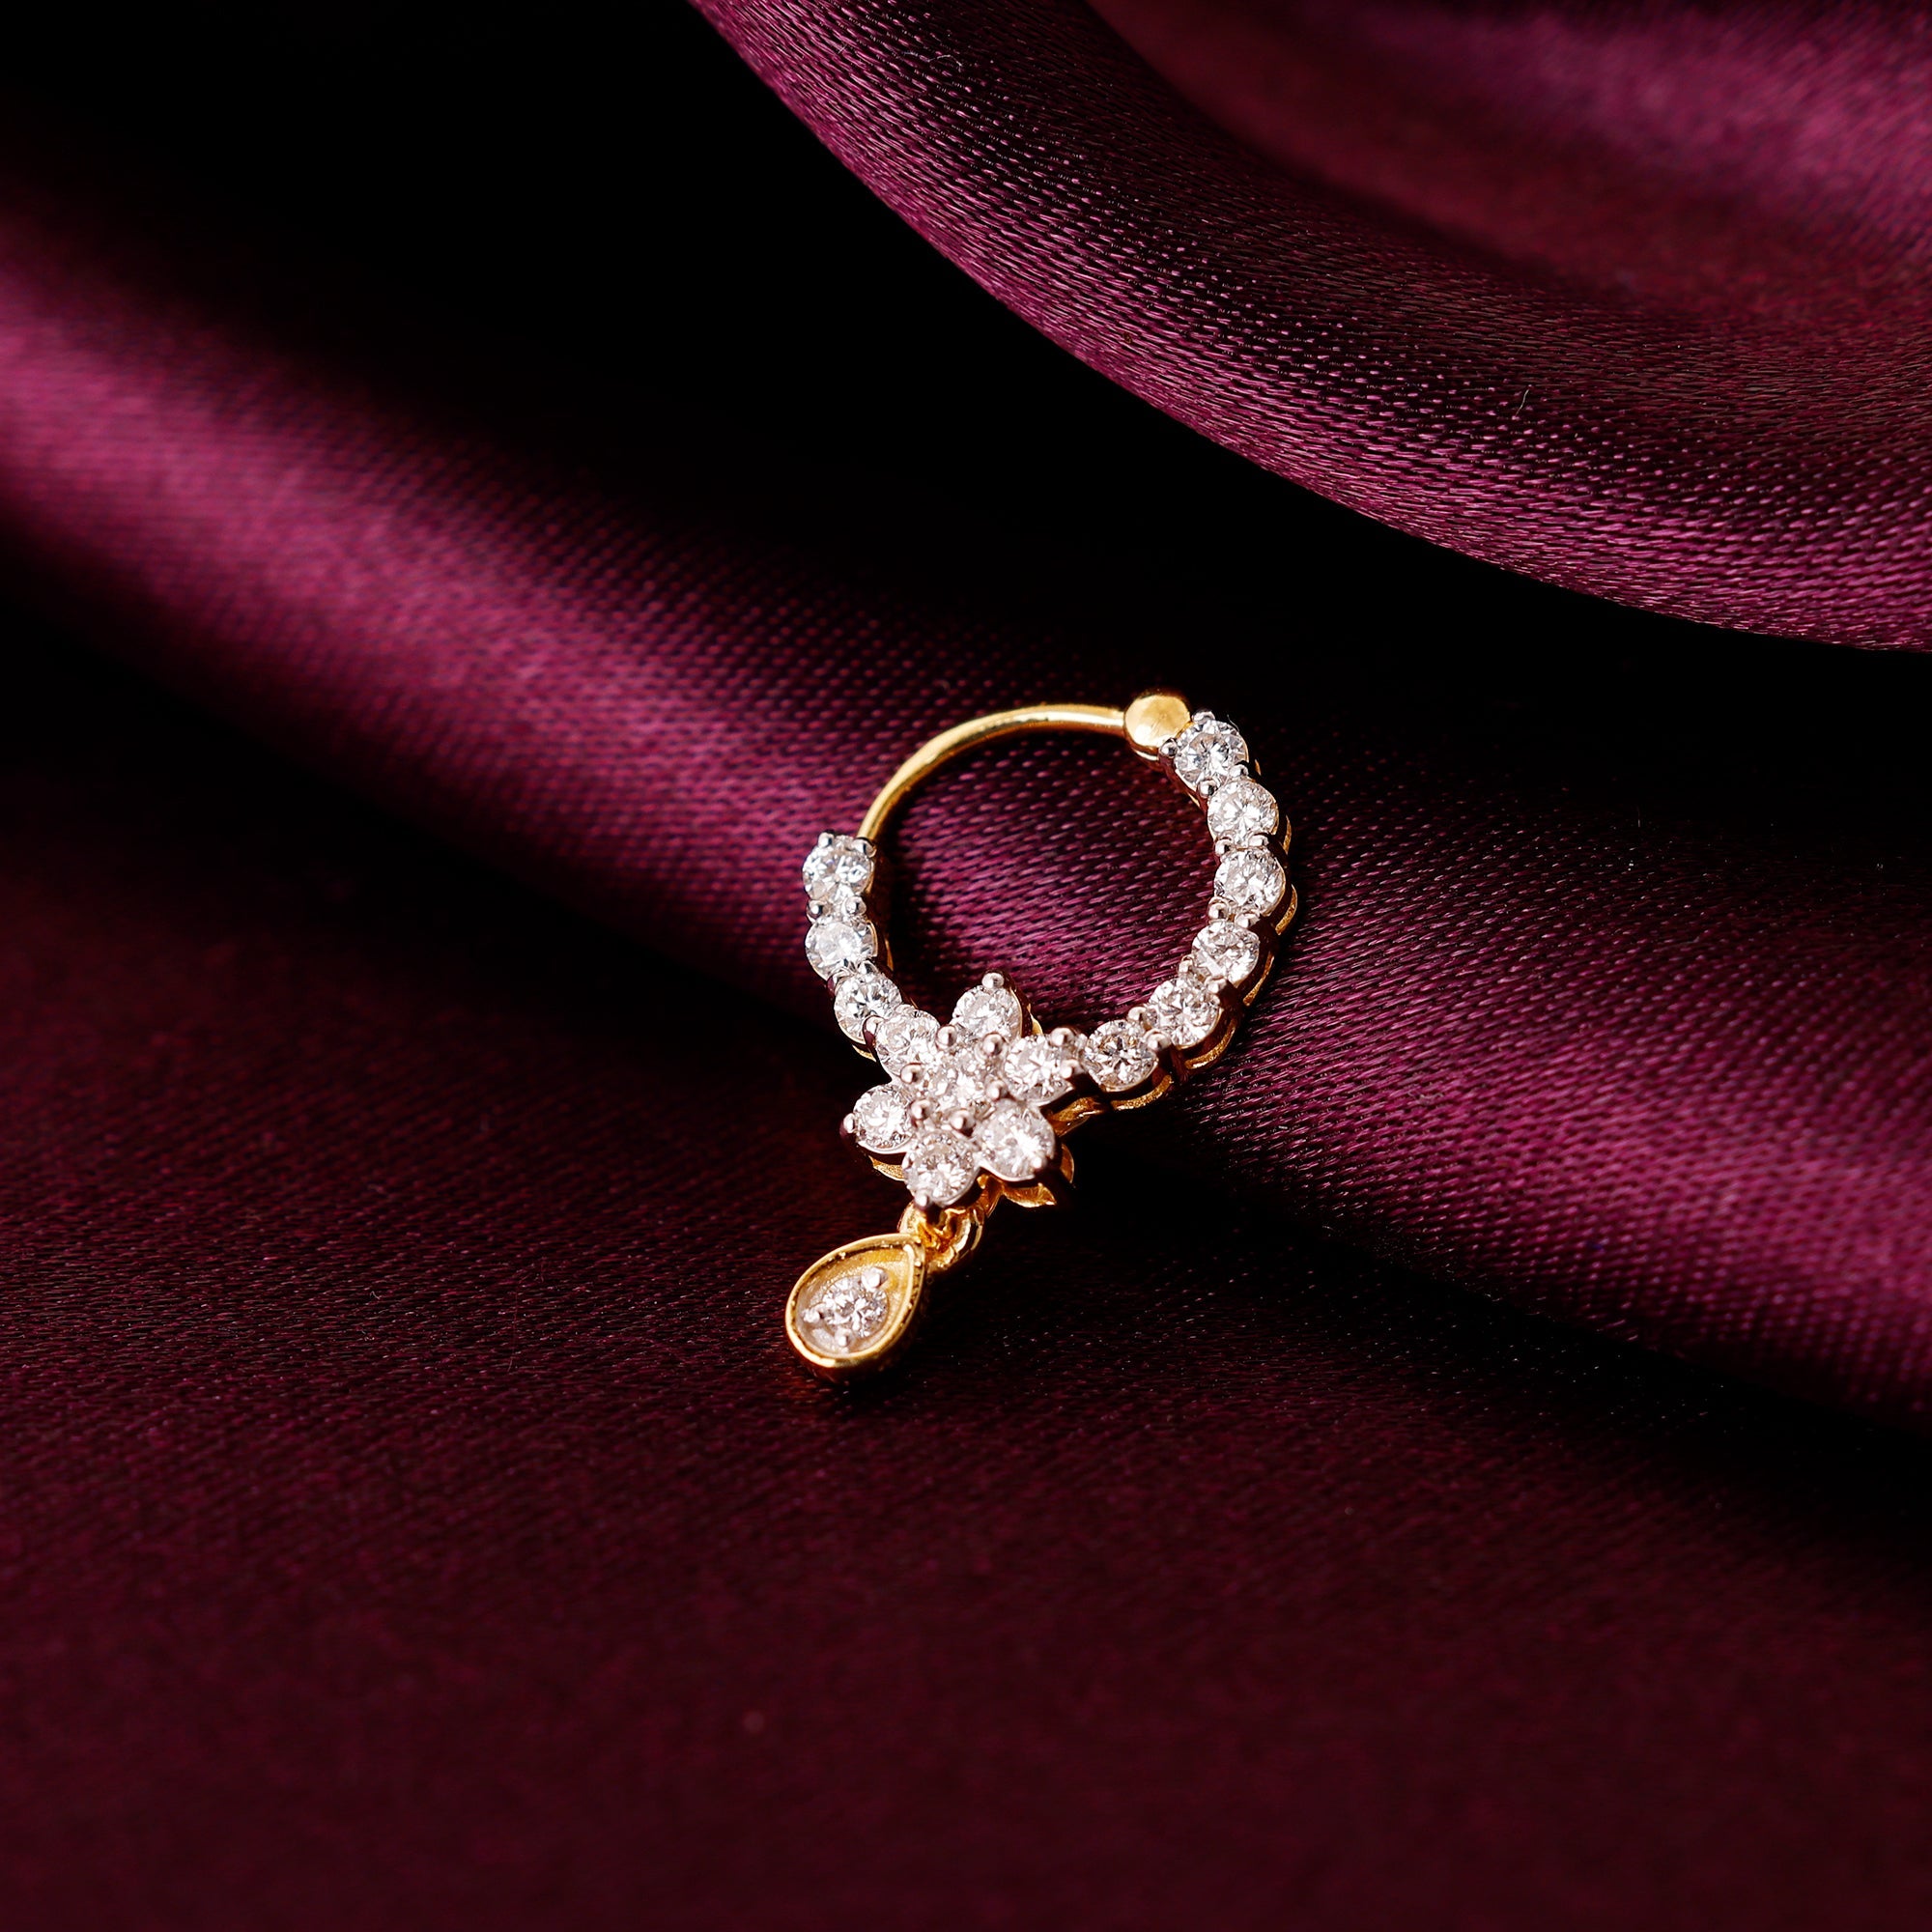 Diamond Nose Ring (0.11 Ct), 18 Kt Yellow Gold Jewellery | Mohan Jewellery